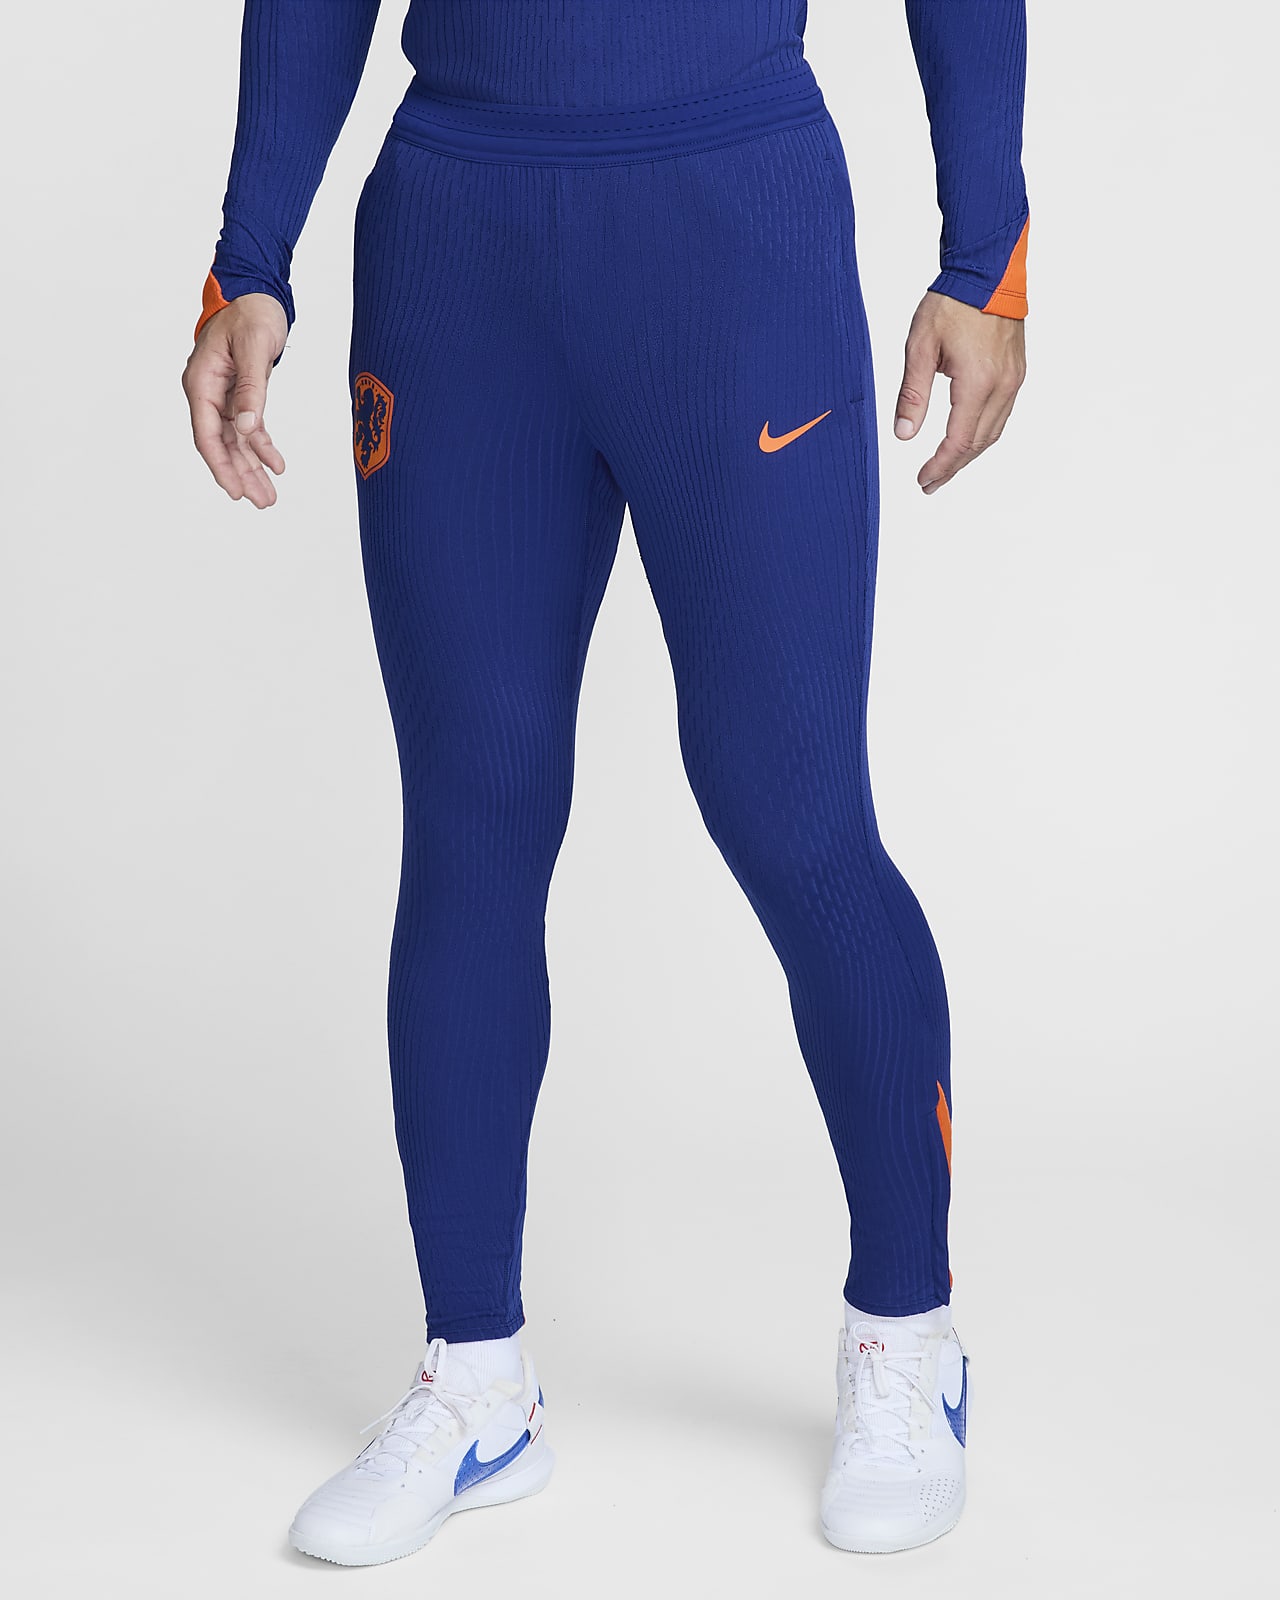 Nederland Strike Elite Nike Dri-FIT ADV knit voetbalbroek voor heren